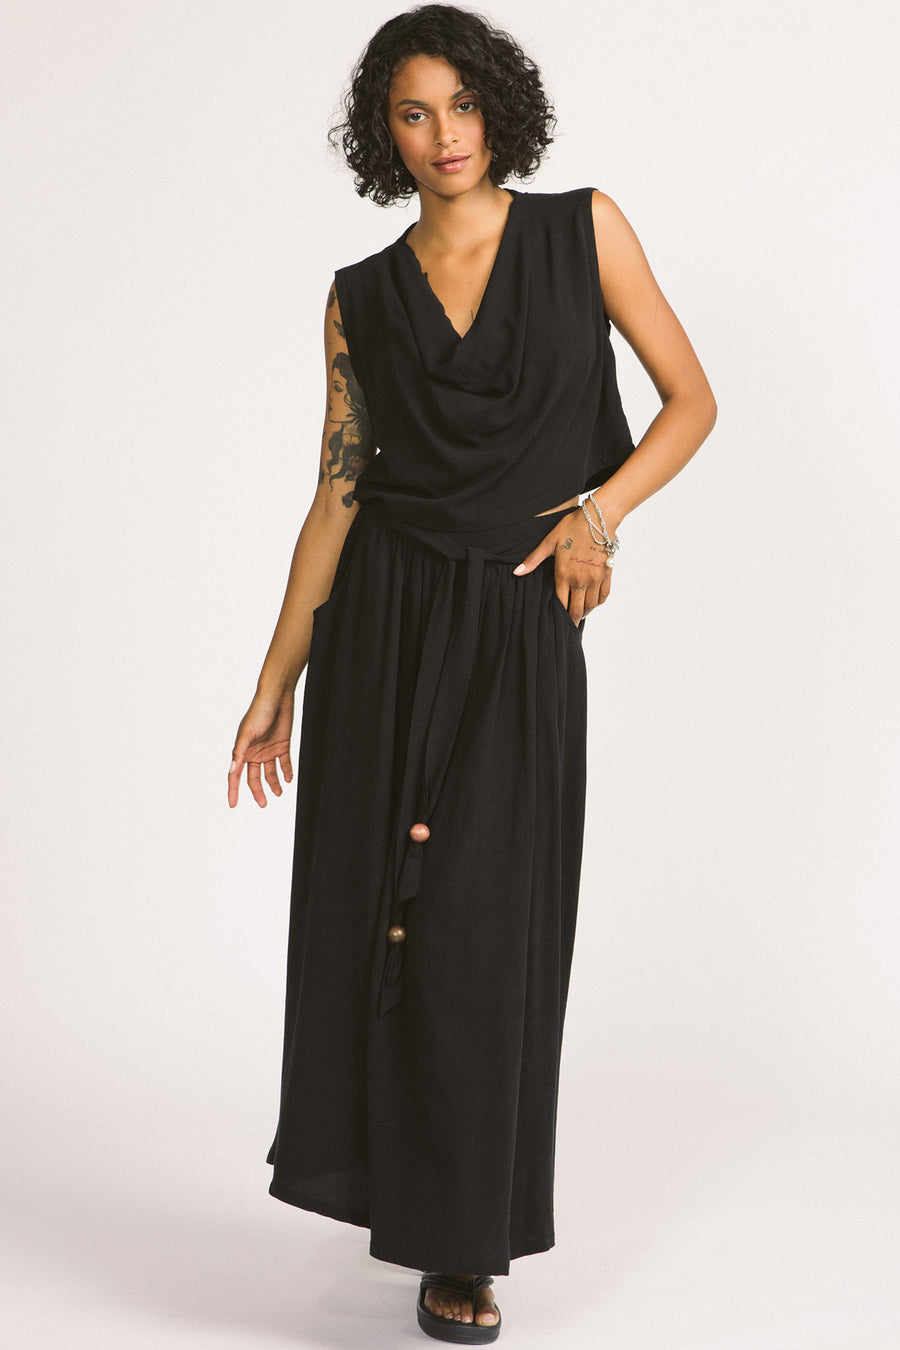 Woman wearing black cowl neck sleeveless Kiko blouse by Allison Wonderland. 